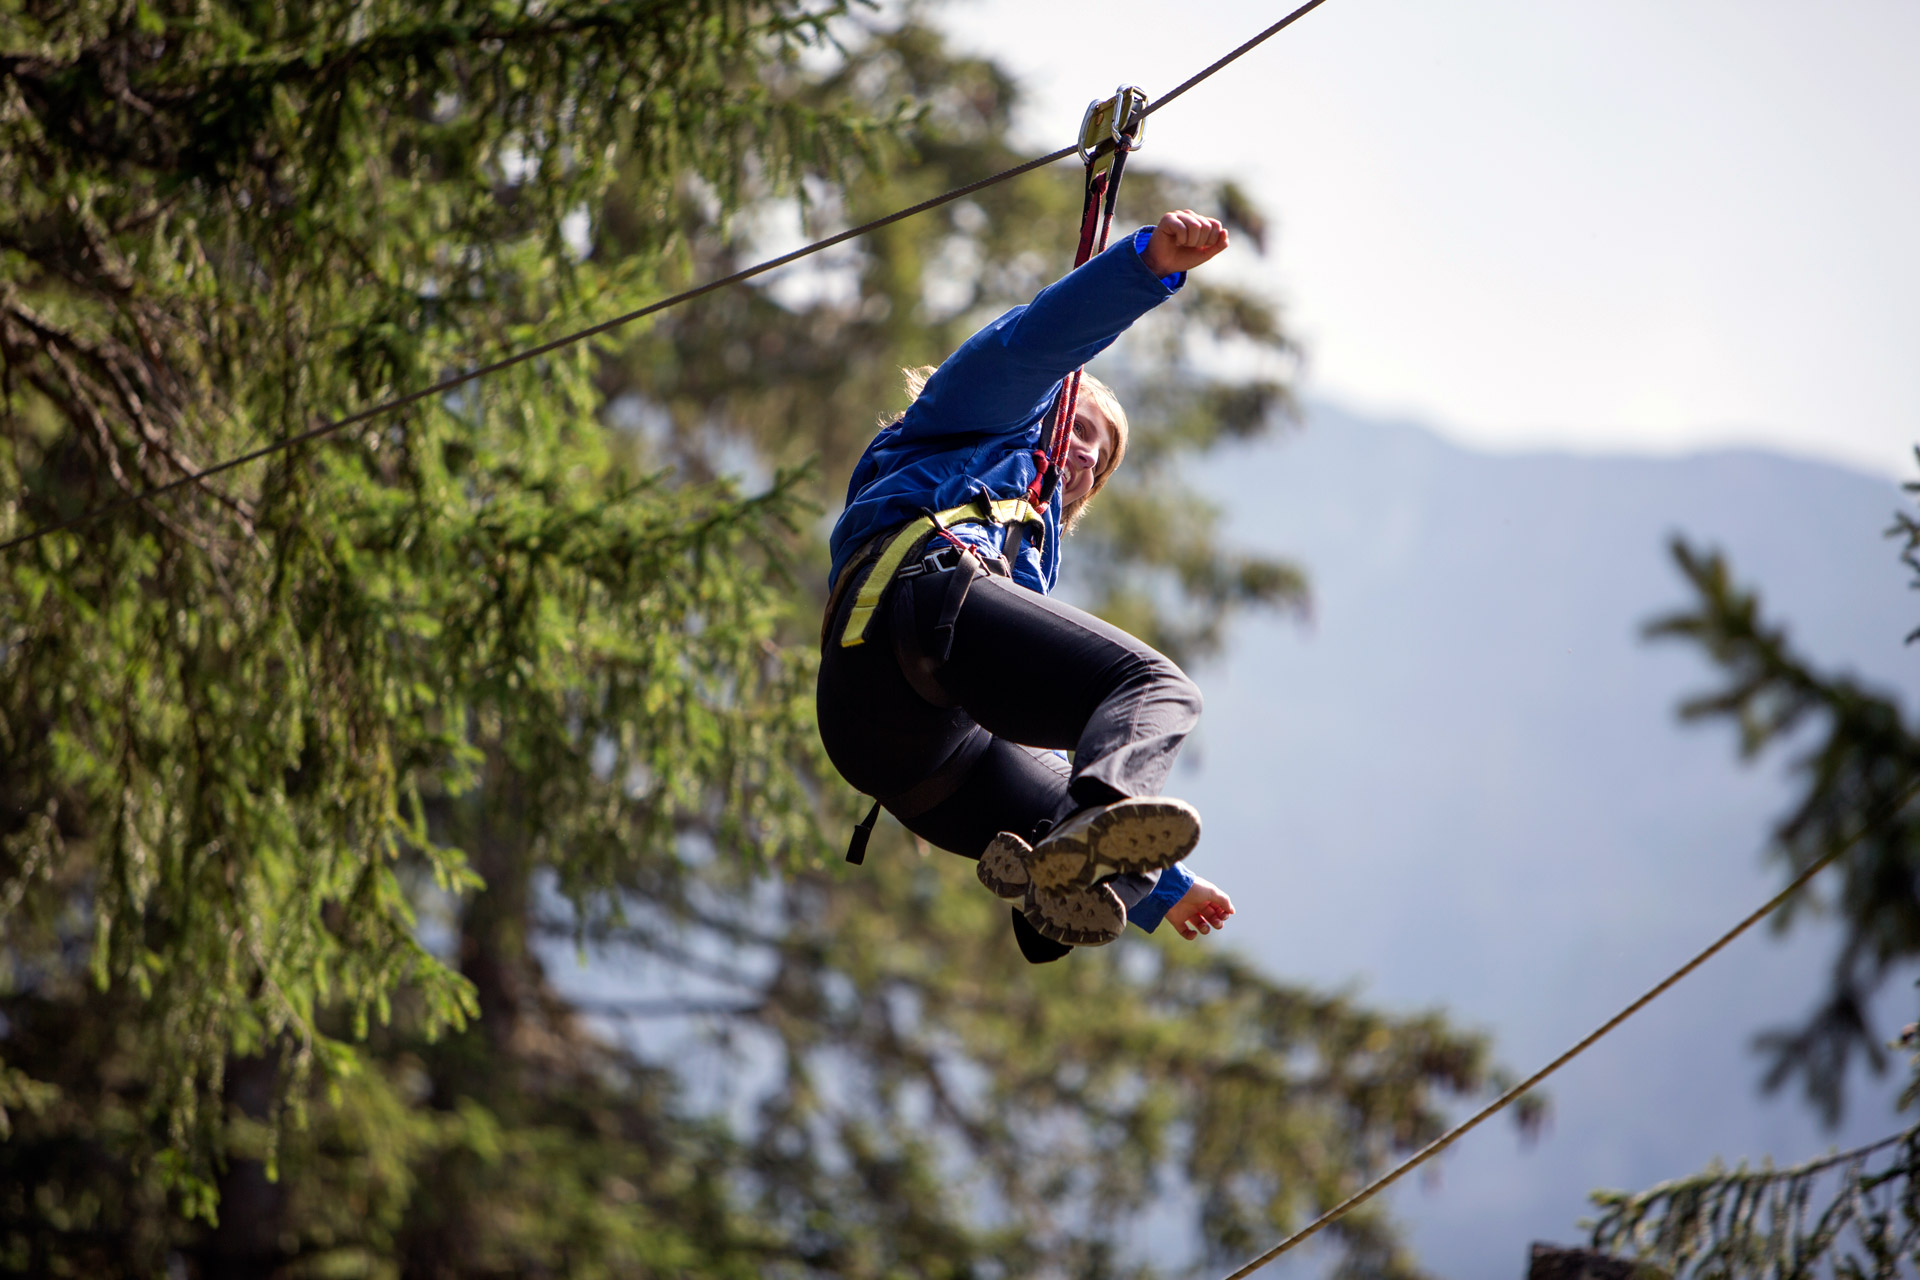 tree-climbing-activity-summer-holidays-megeve-alpes_02